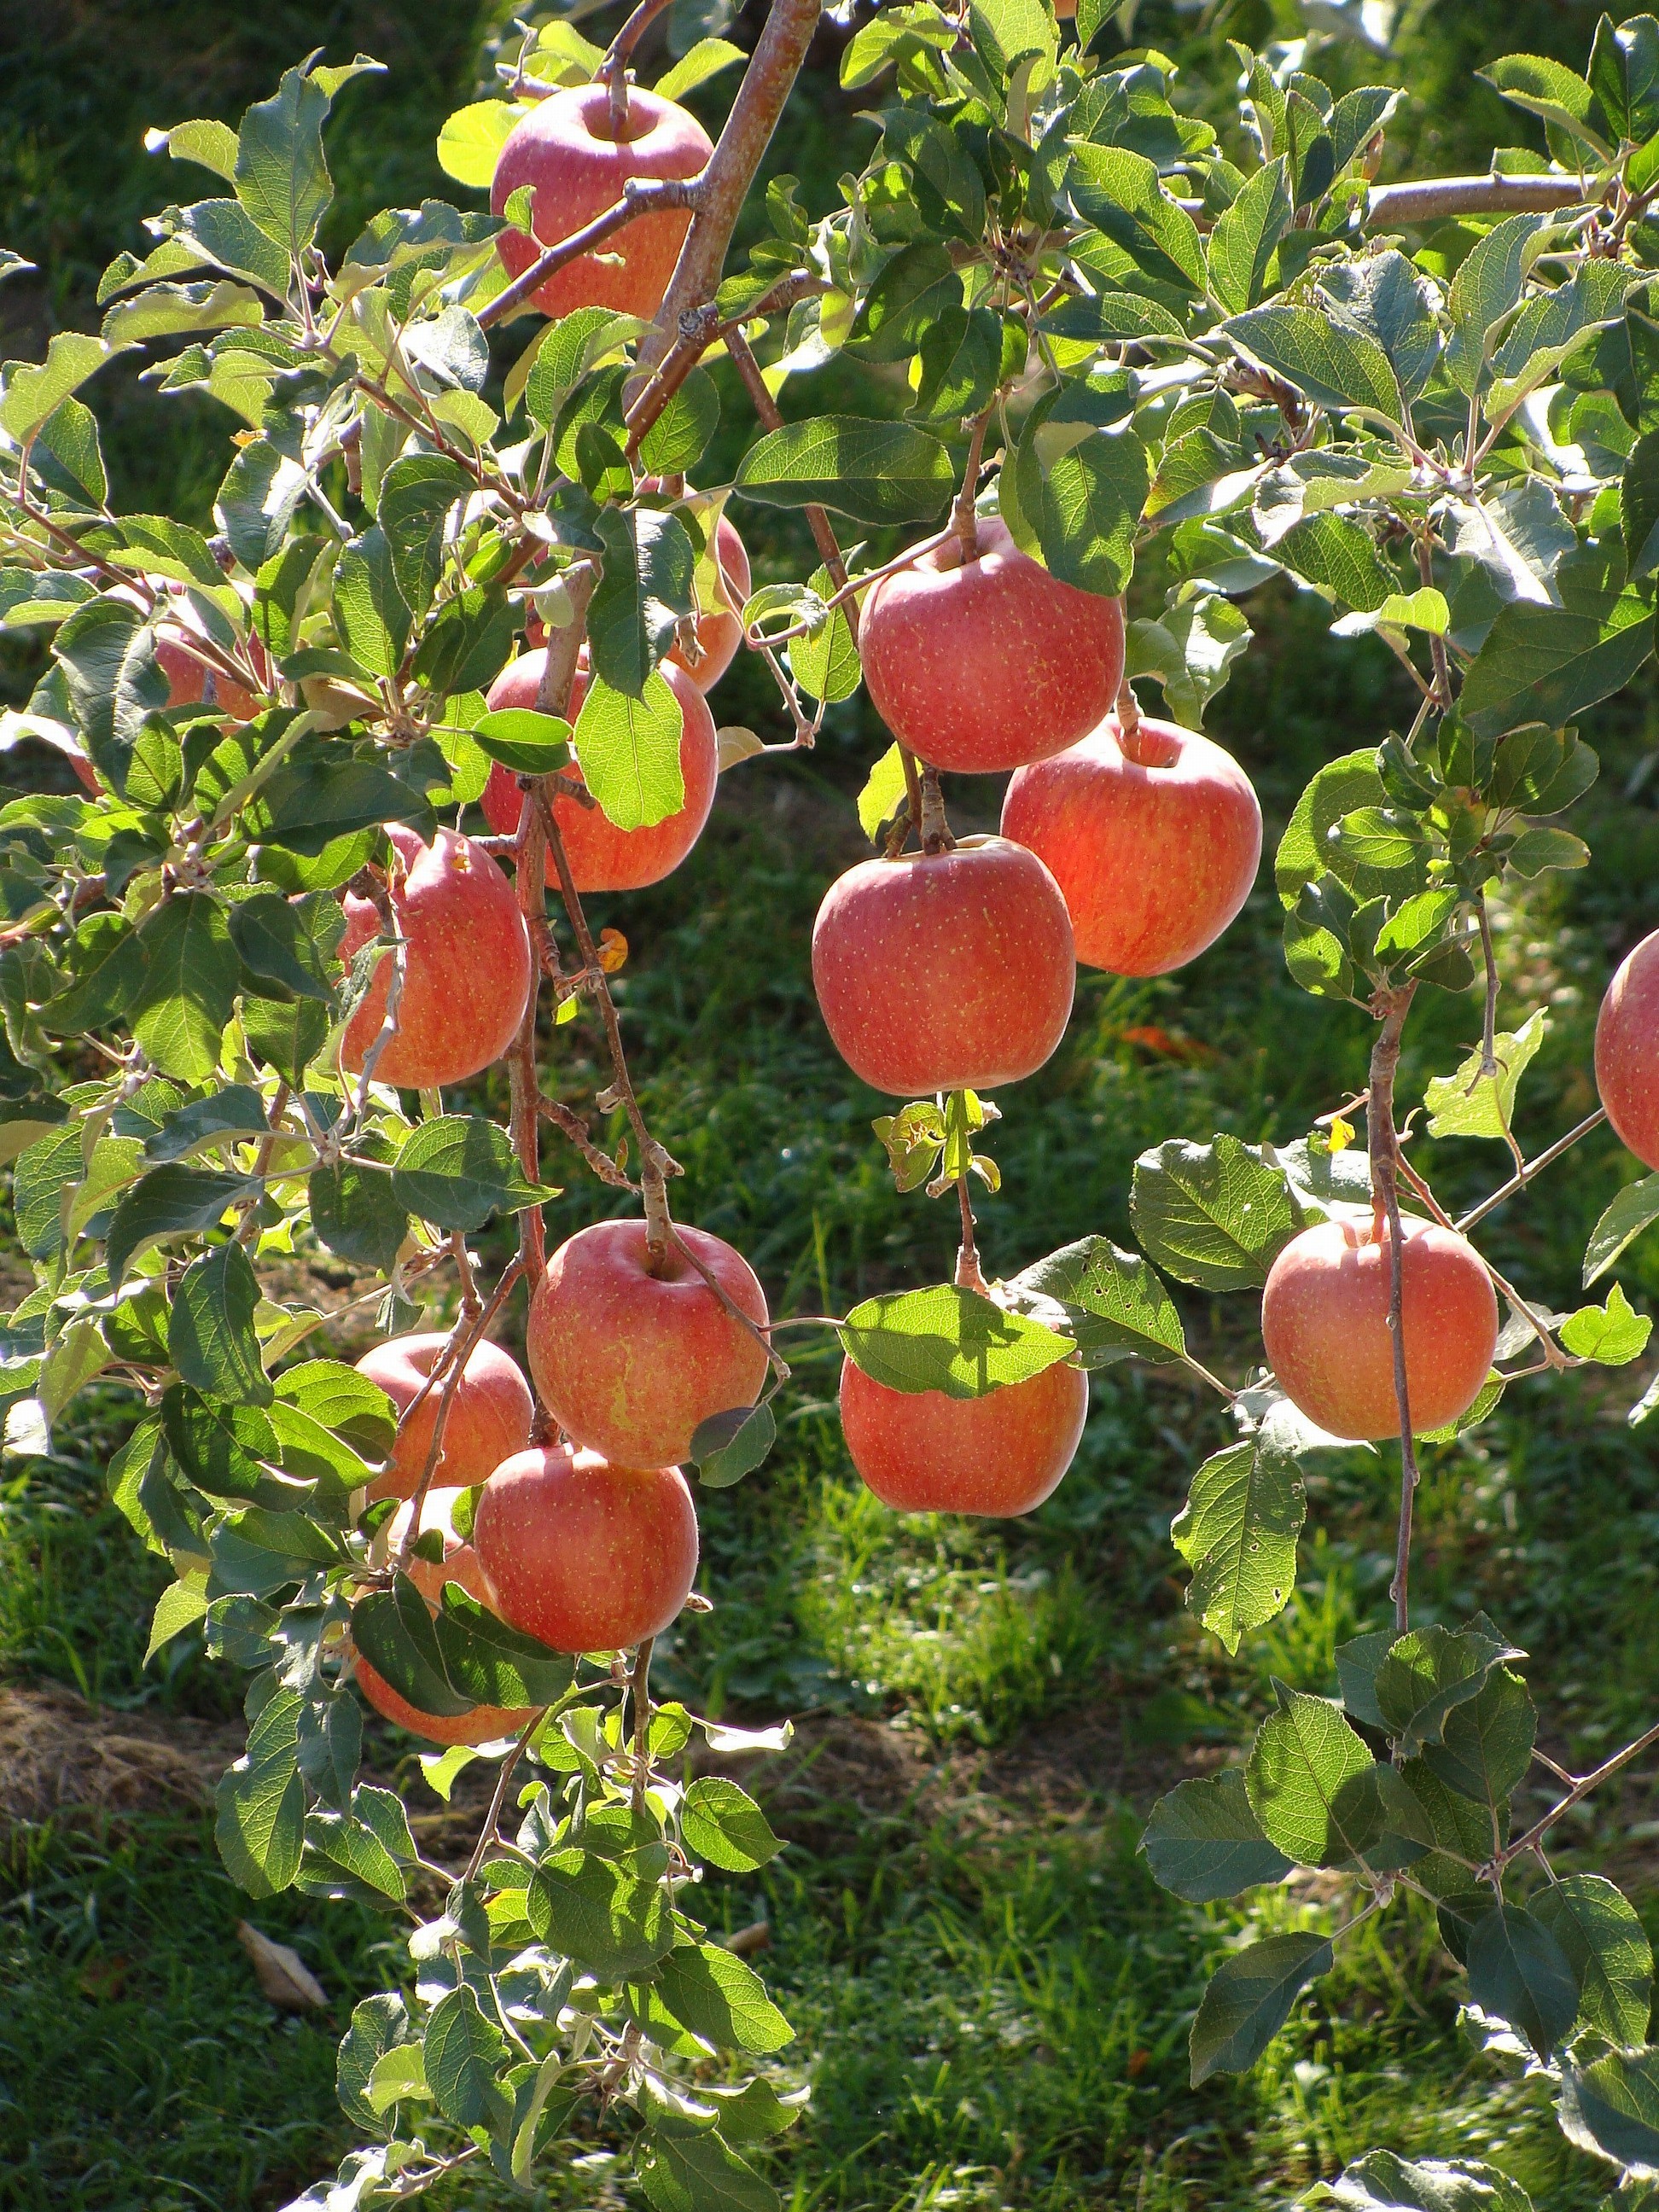 fuji apples malus pumila rosaceae domestica var file apple wikipedia tree fruit varieties trees japan